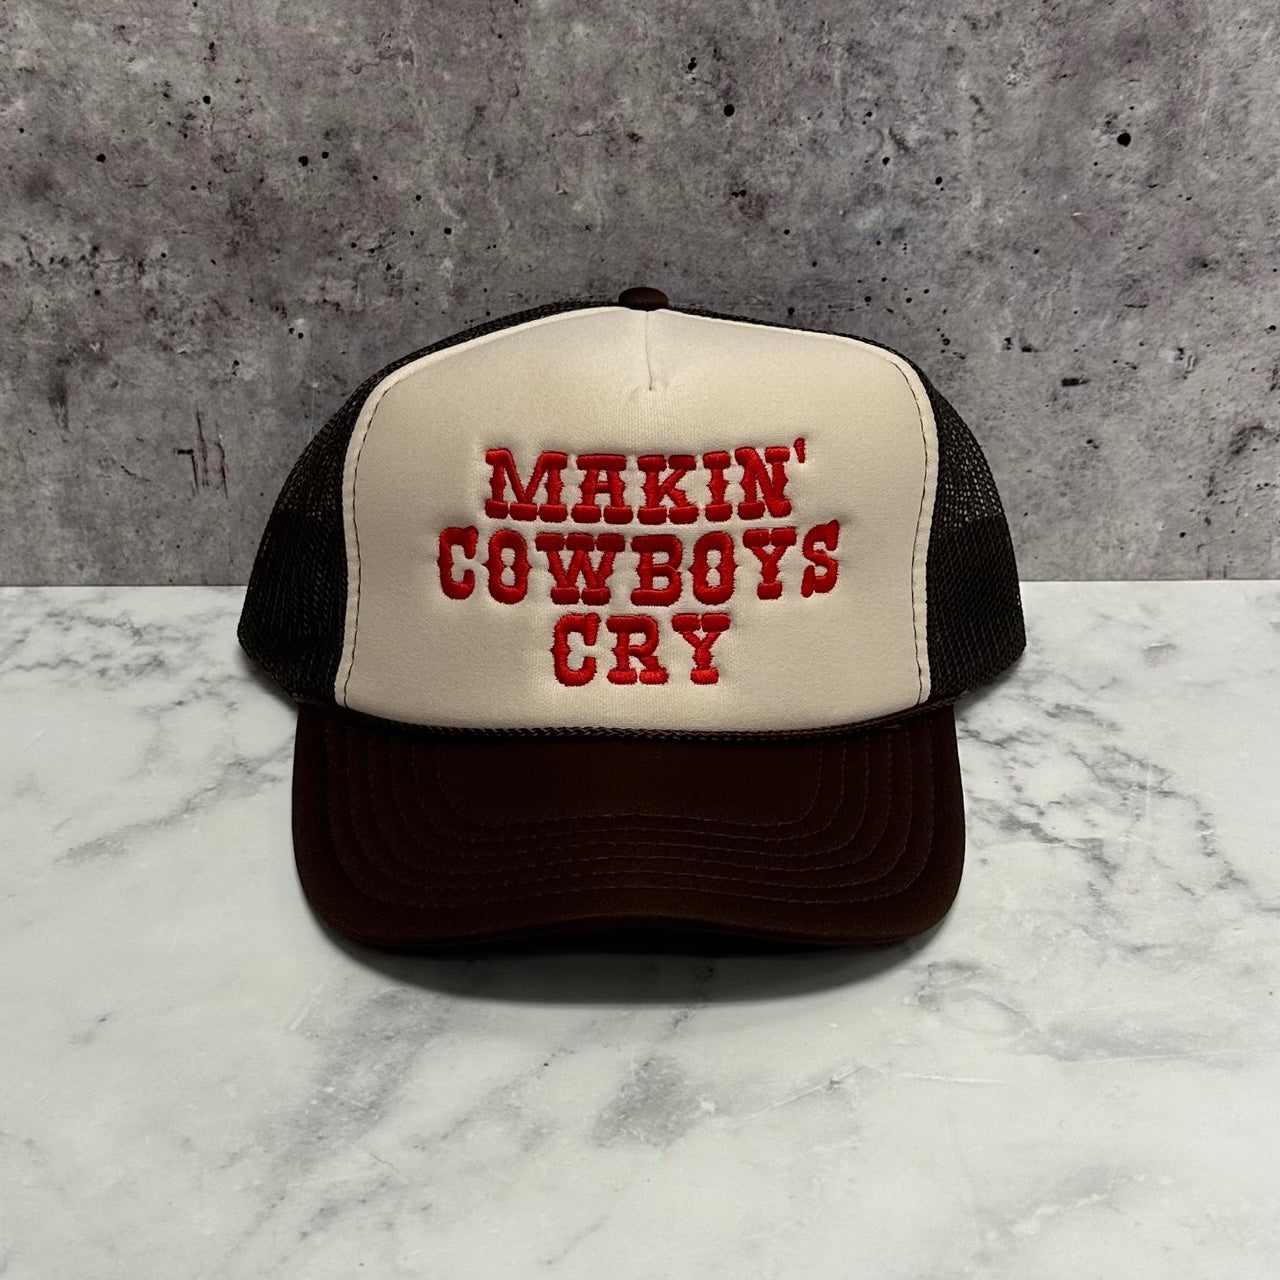 Makin' Cowboys Cry Original Trucker Hat - Trendy Vintage Western Graphic Y2K Snapback Cap for Men and Women